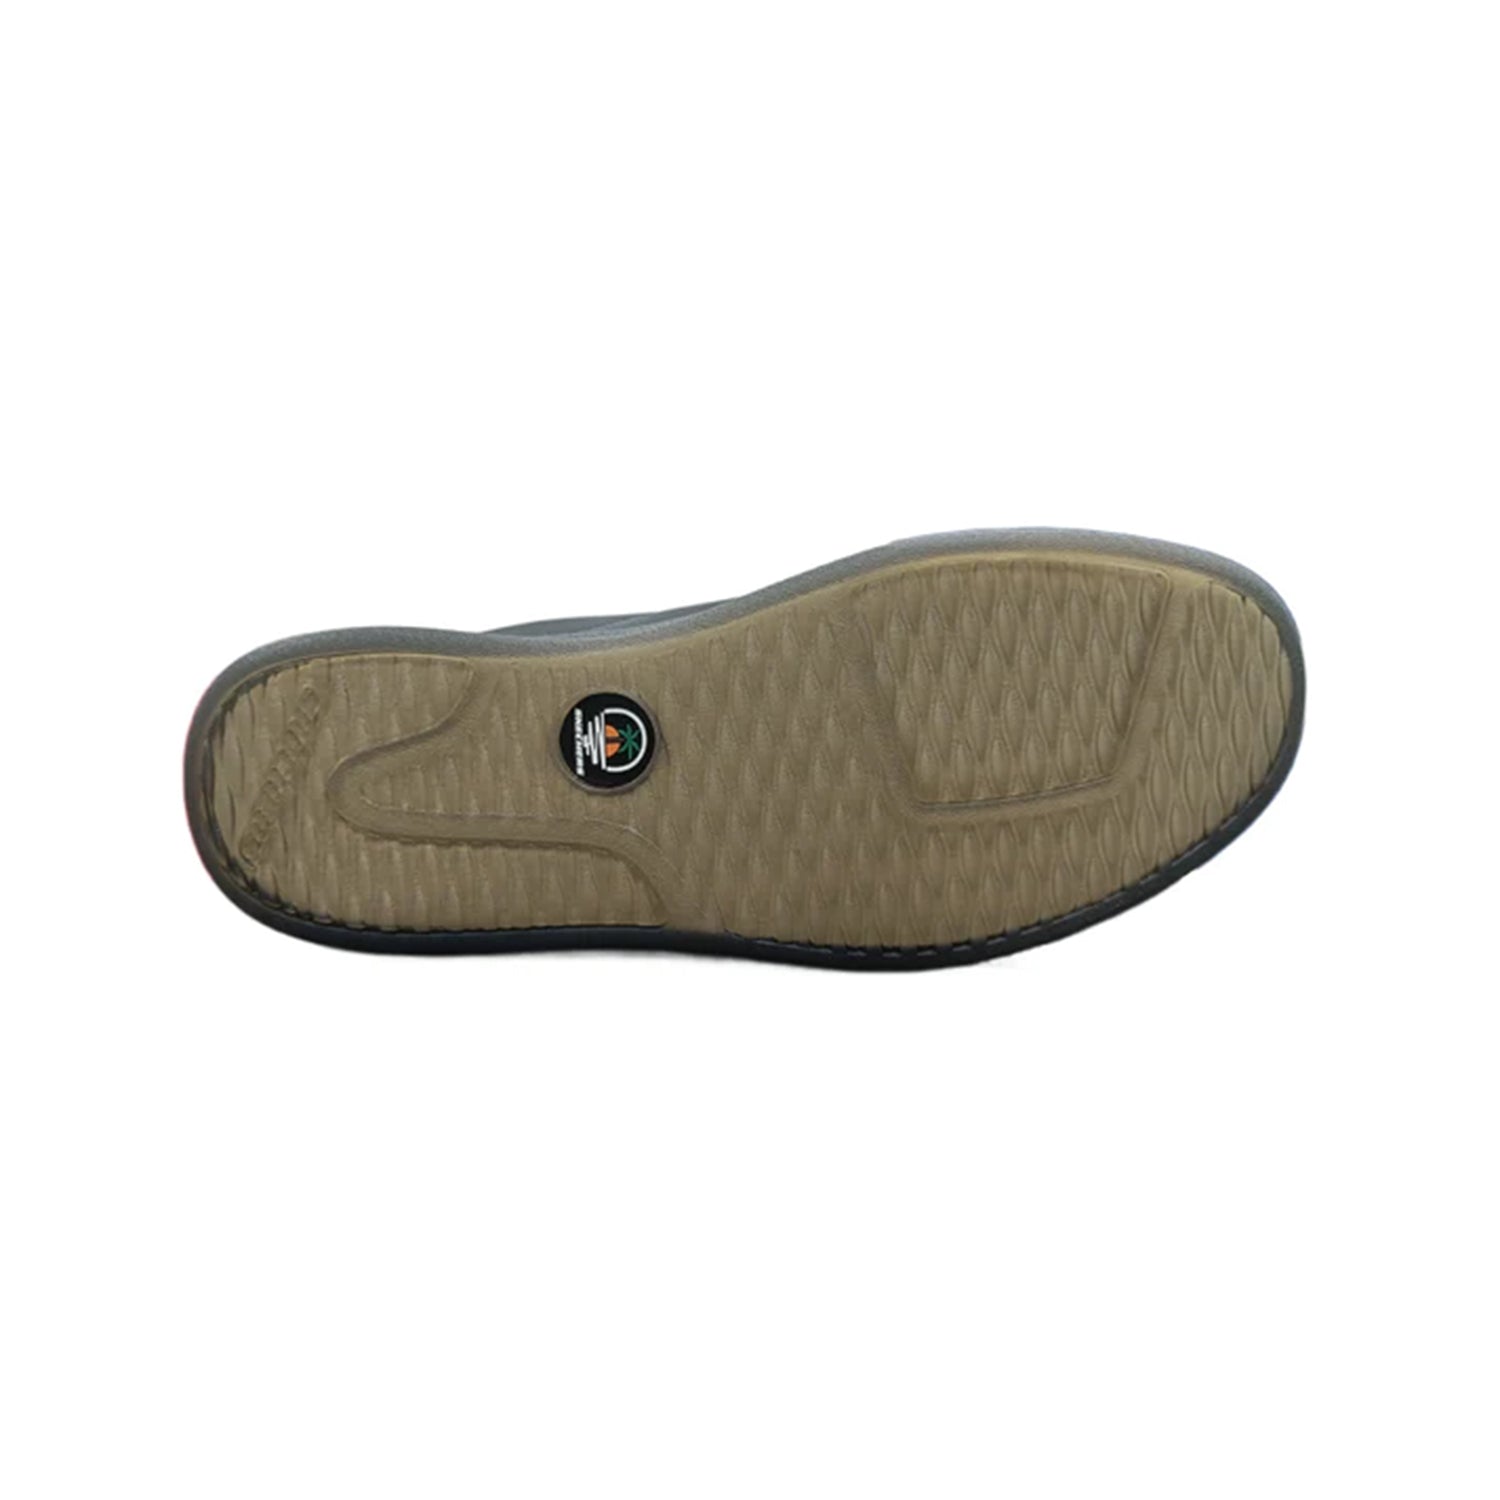 SKECHERS Verloma Conlan Men's  Casual Shoe, Black - Best Price online Prokicksports.com